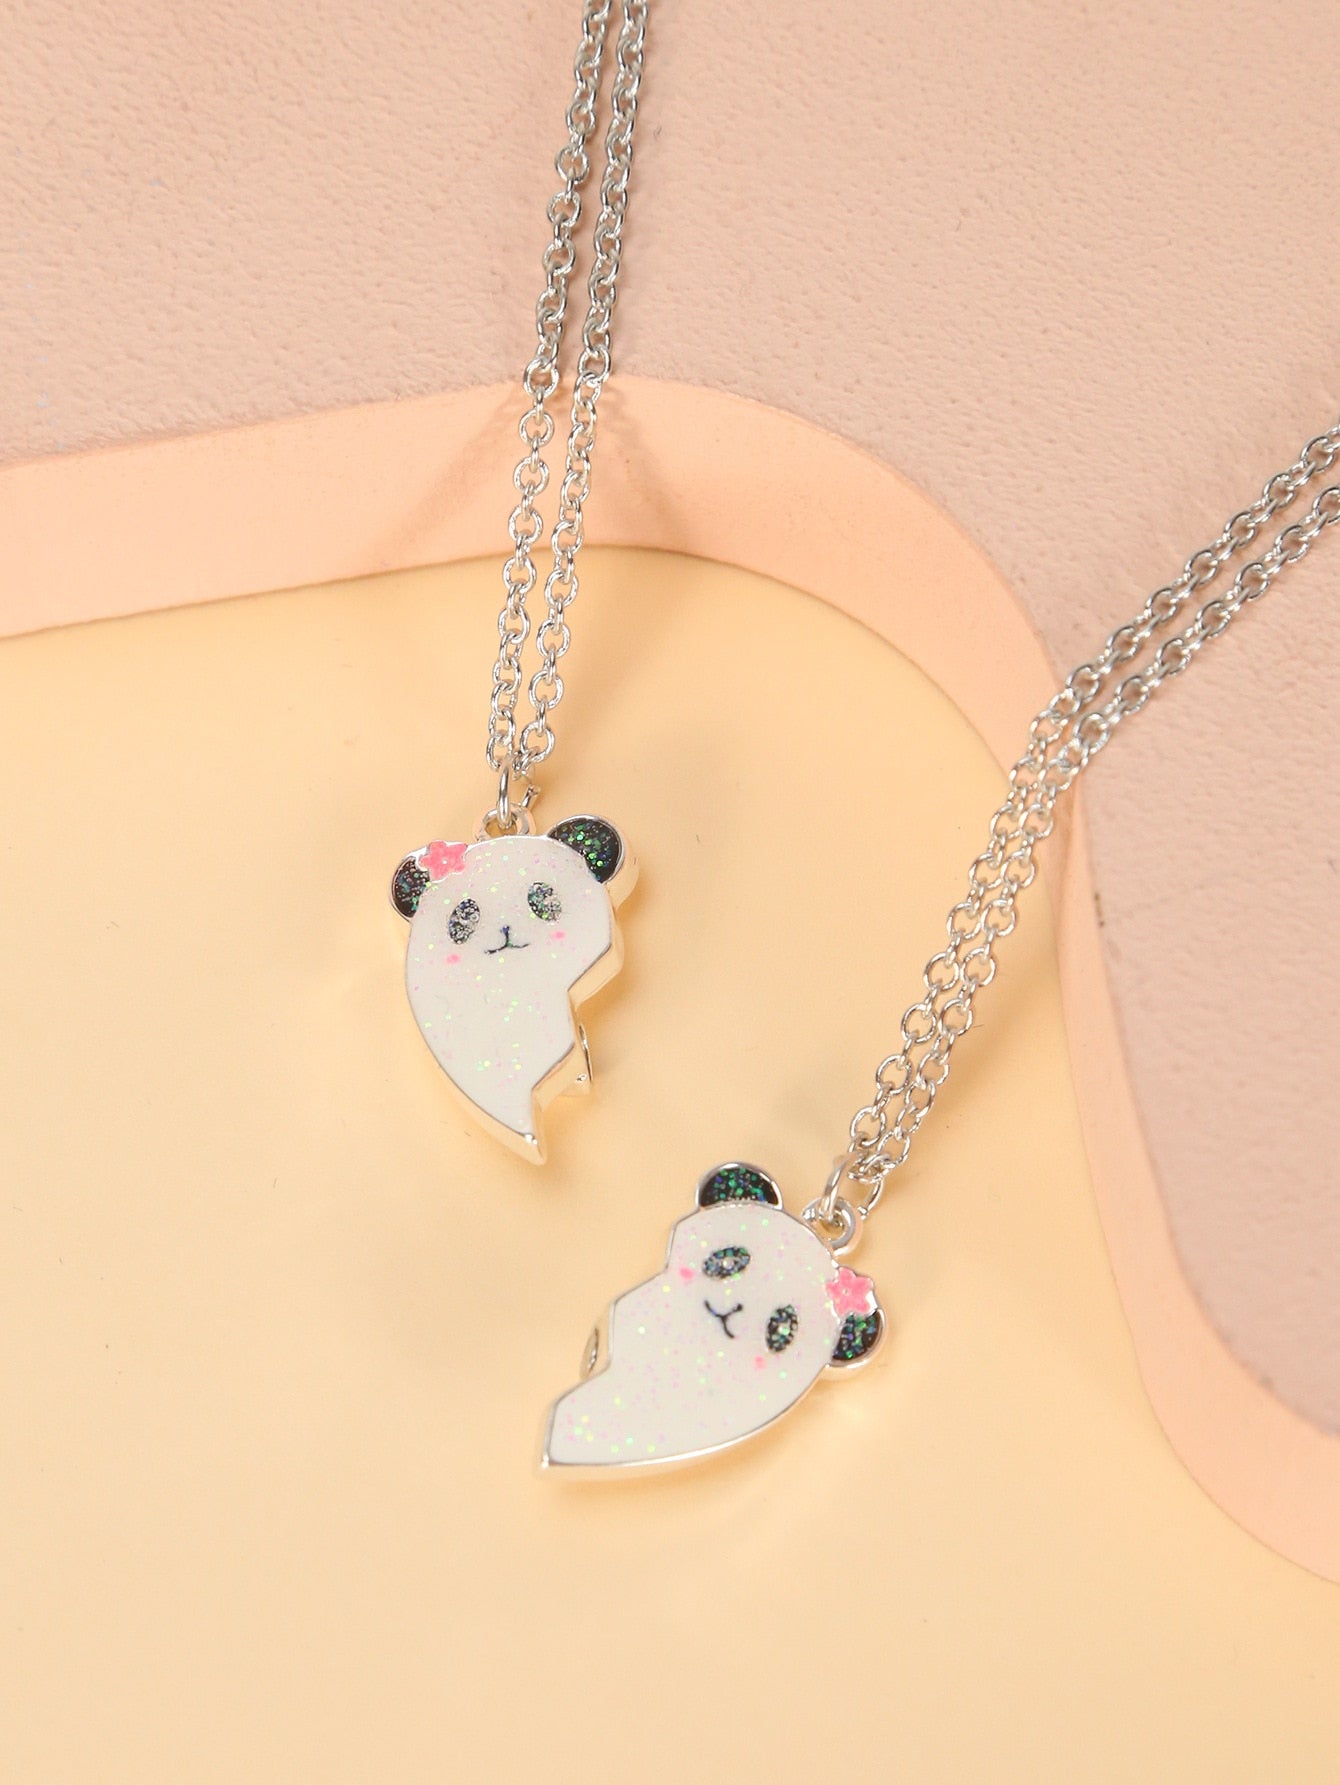 Panda Heart Necklace Set